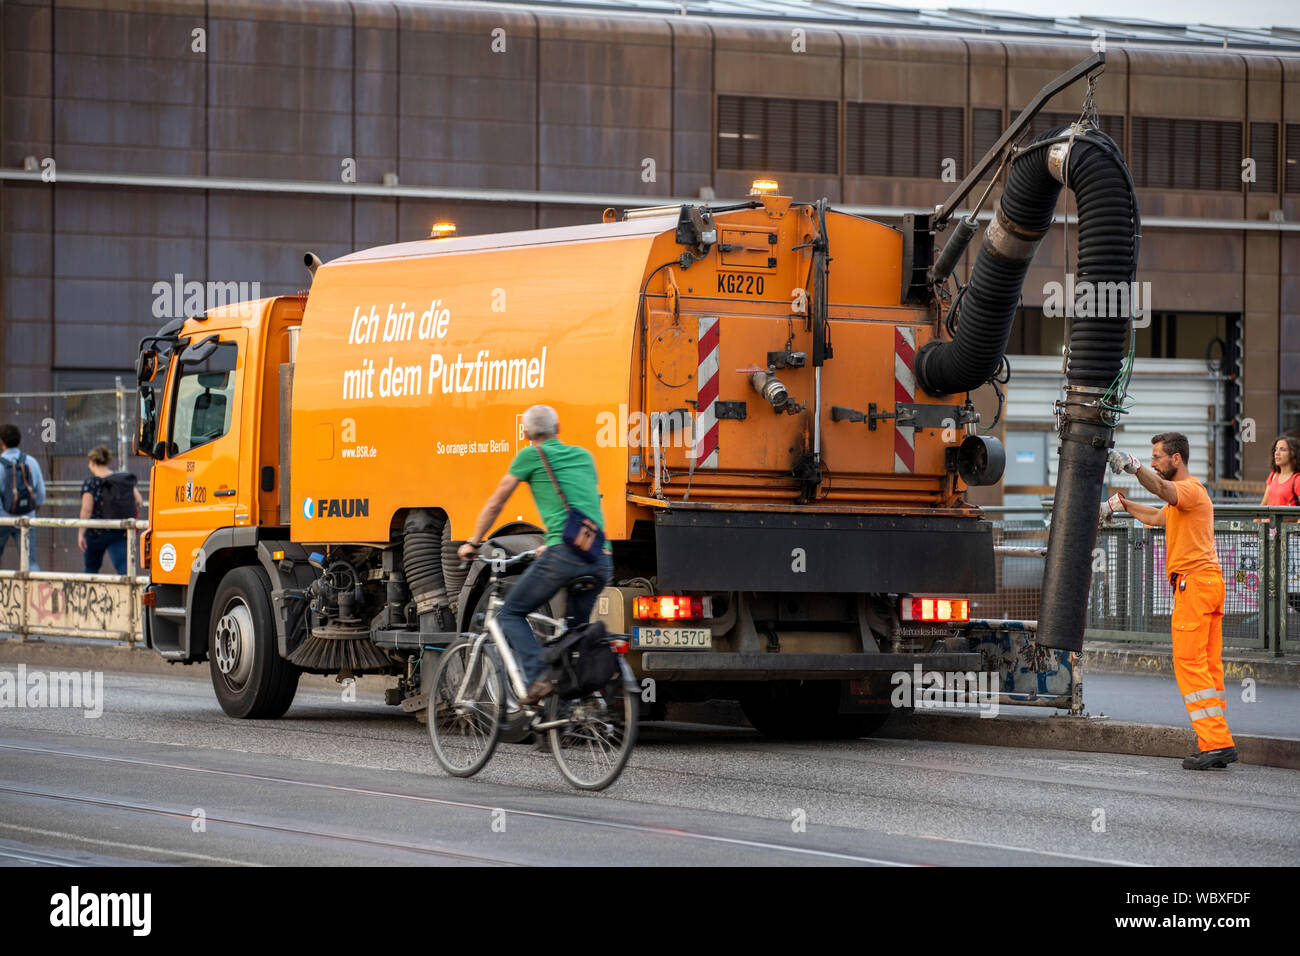 Street cleaning vehicle, at the railway station Warschauer Strasse, Berlin, Stock Photo